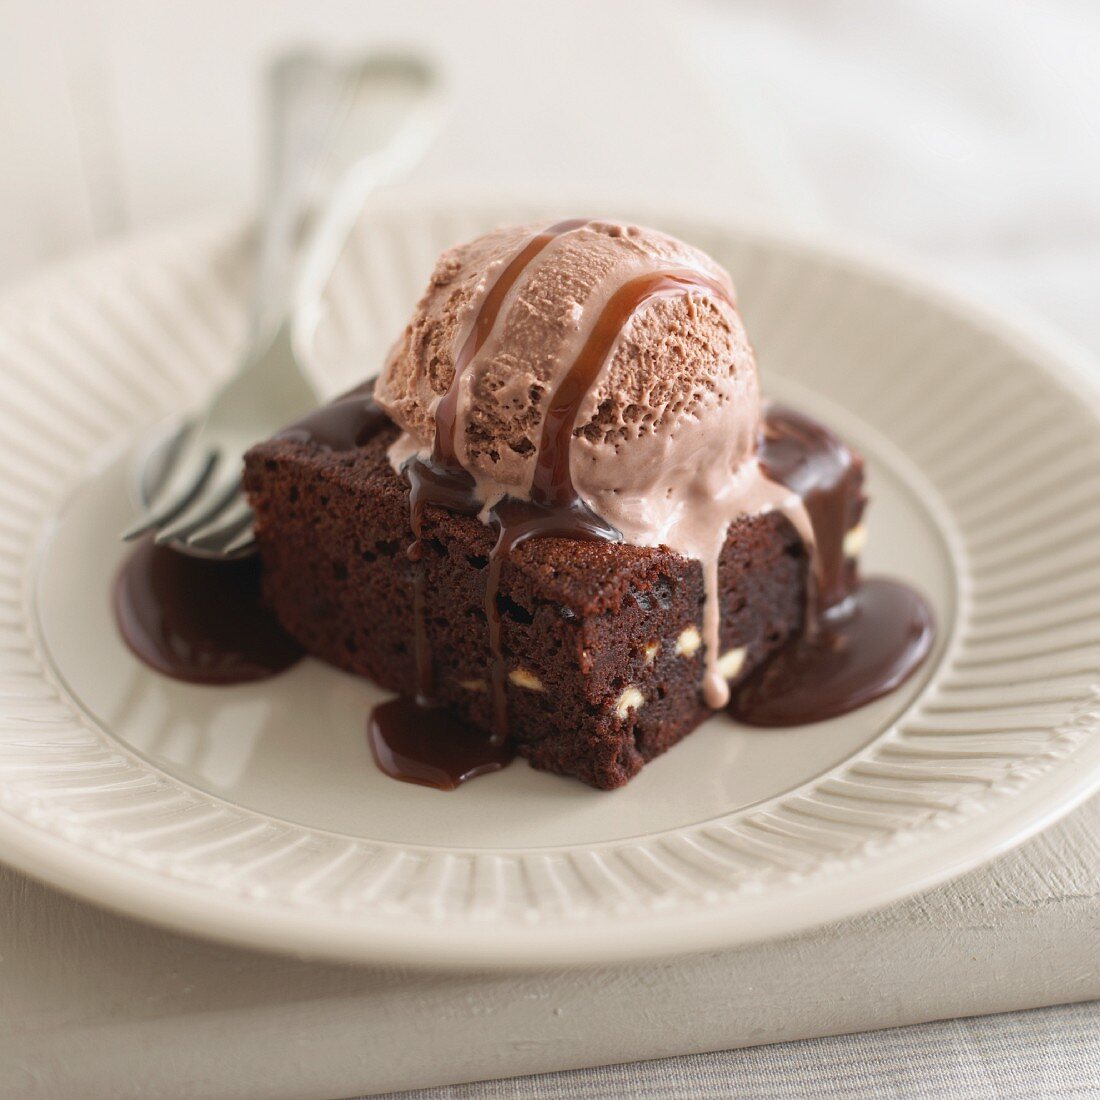 Brownie with hot chocolate sauce and chocolate ice cream